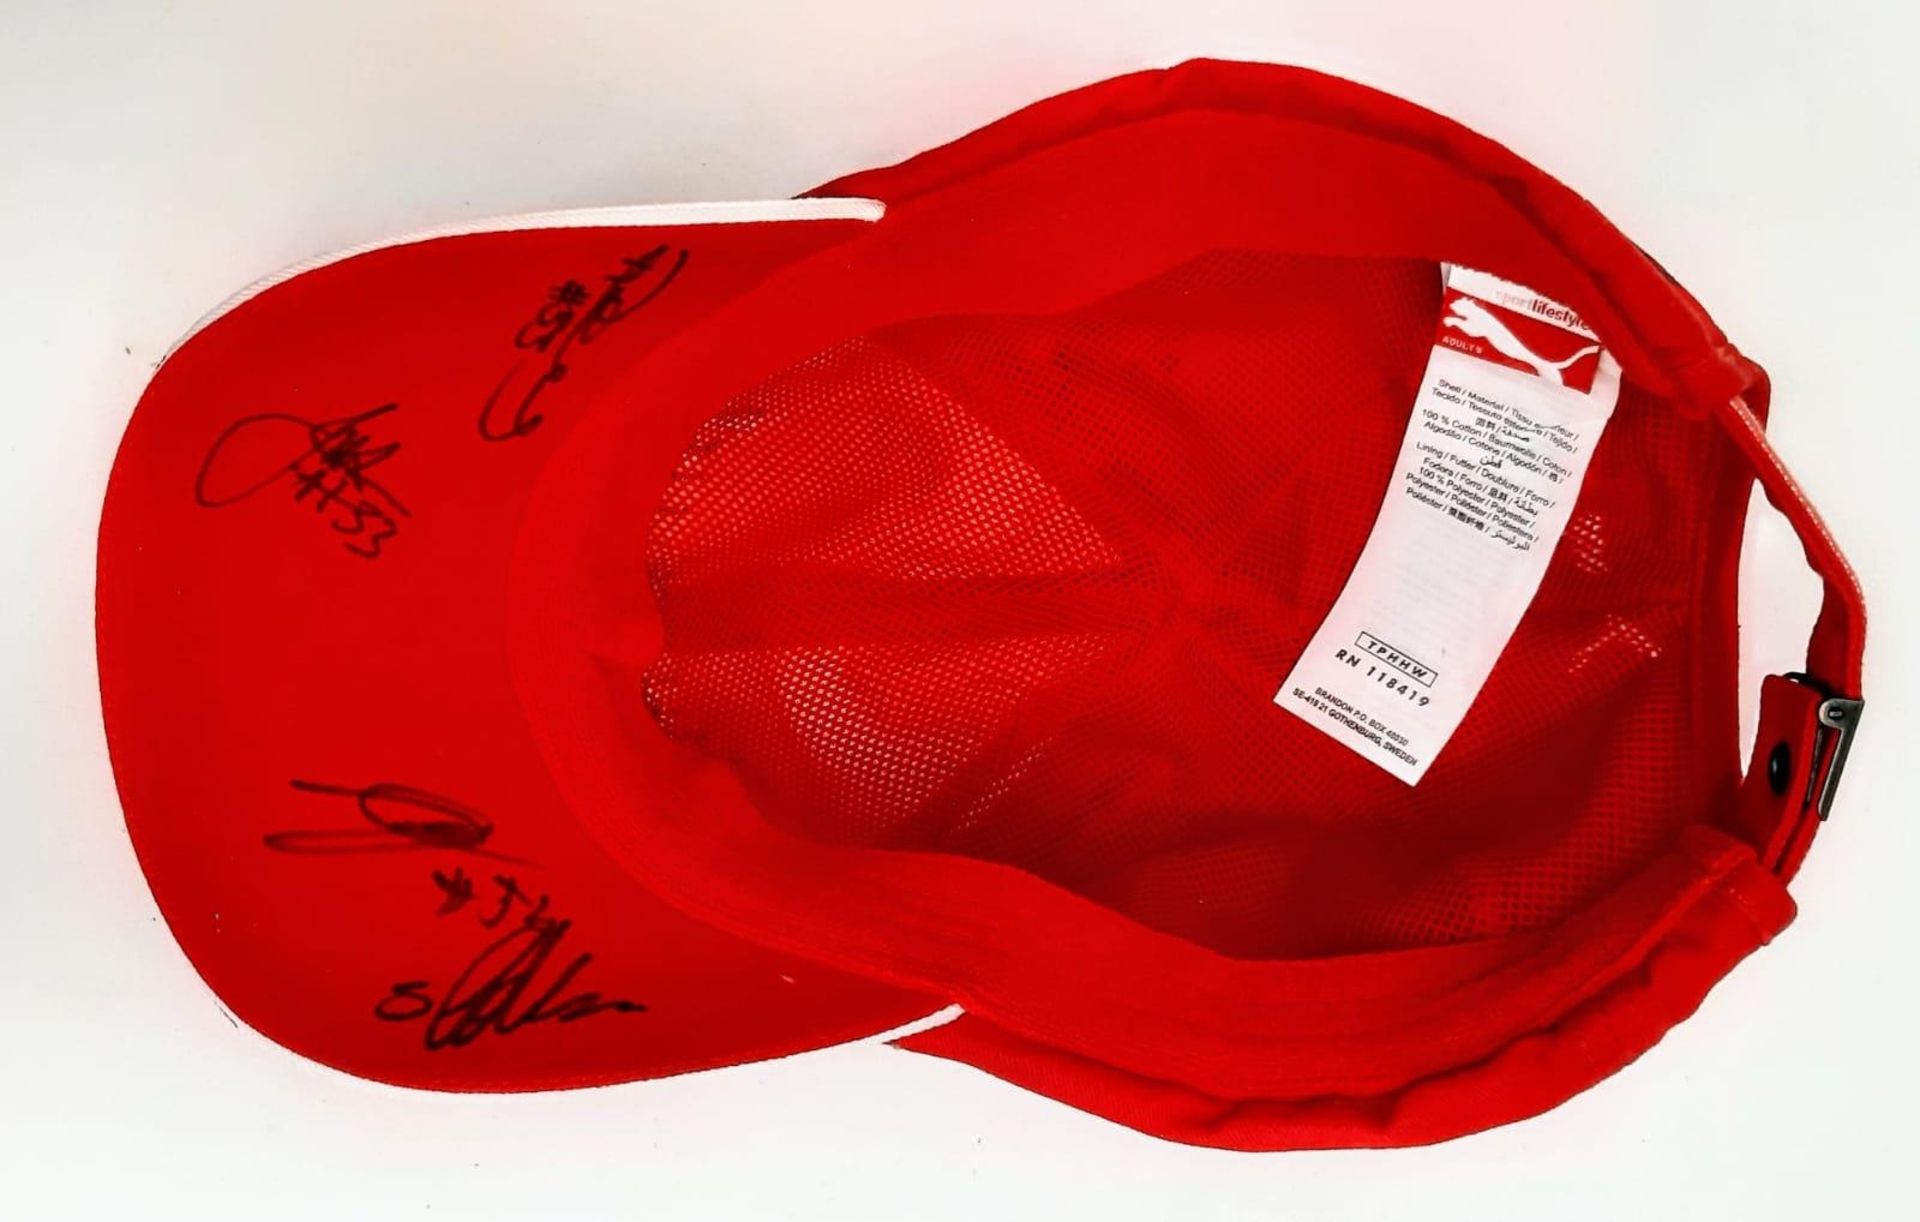 An Official Ferrari Team Cap - Over 20 signatures including Ferrari drivers and team principals. - Image 5 of 14